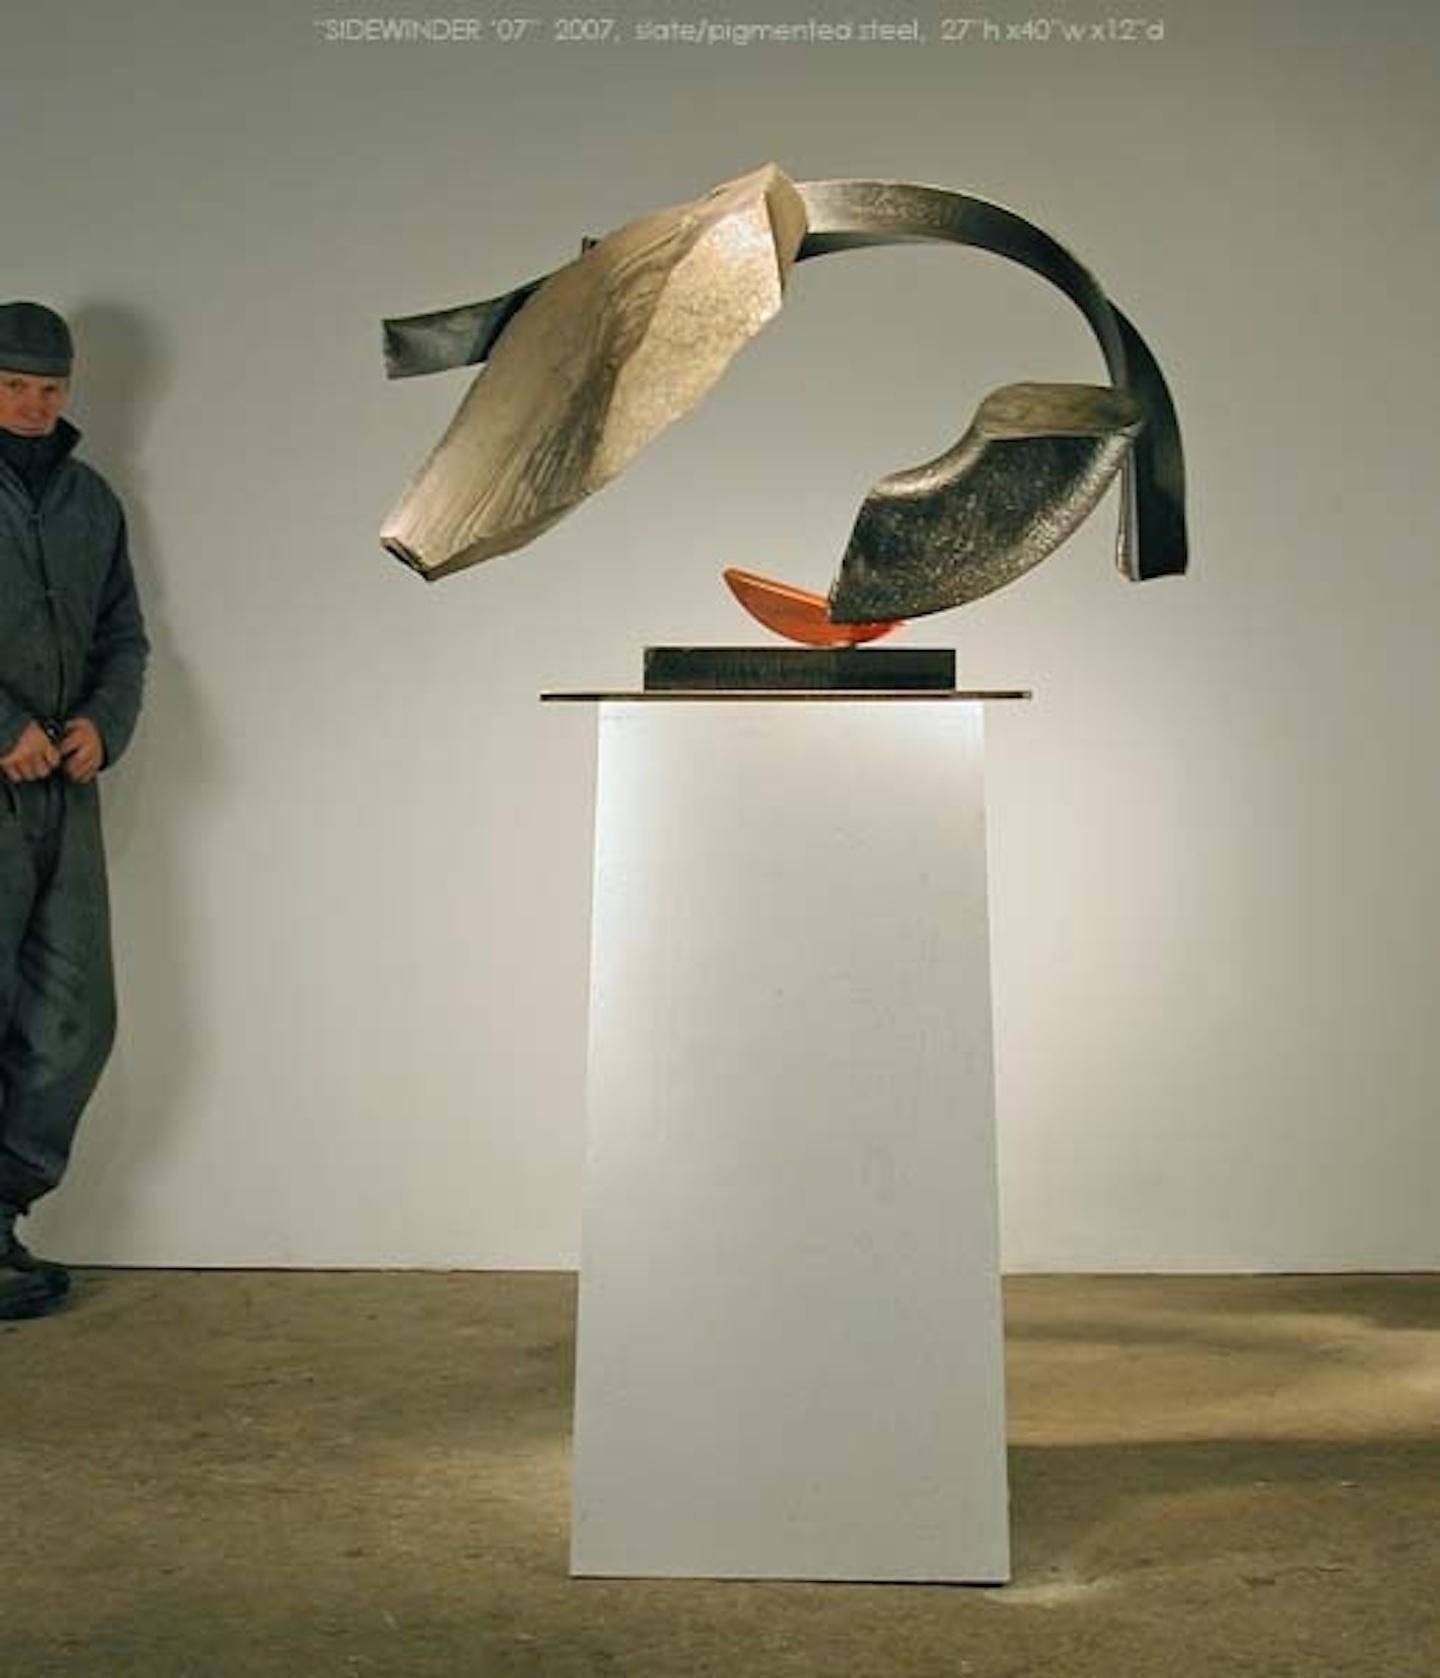 Sidewinder '07 - Gray Abstract Sculpture by John Van Alstine